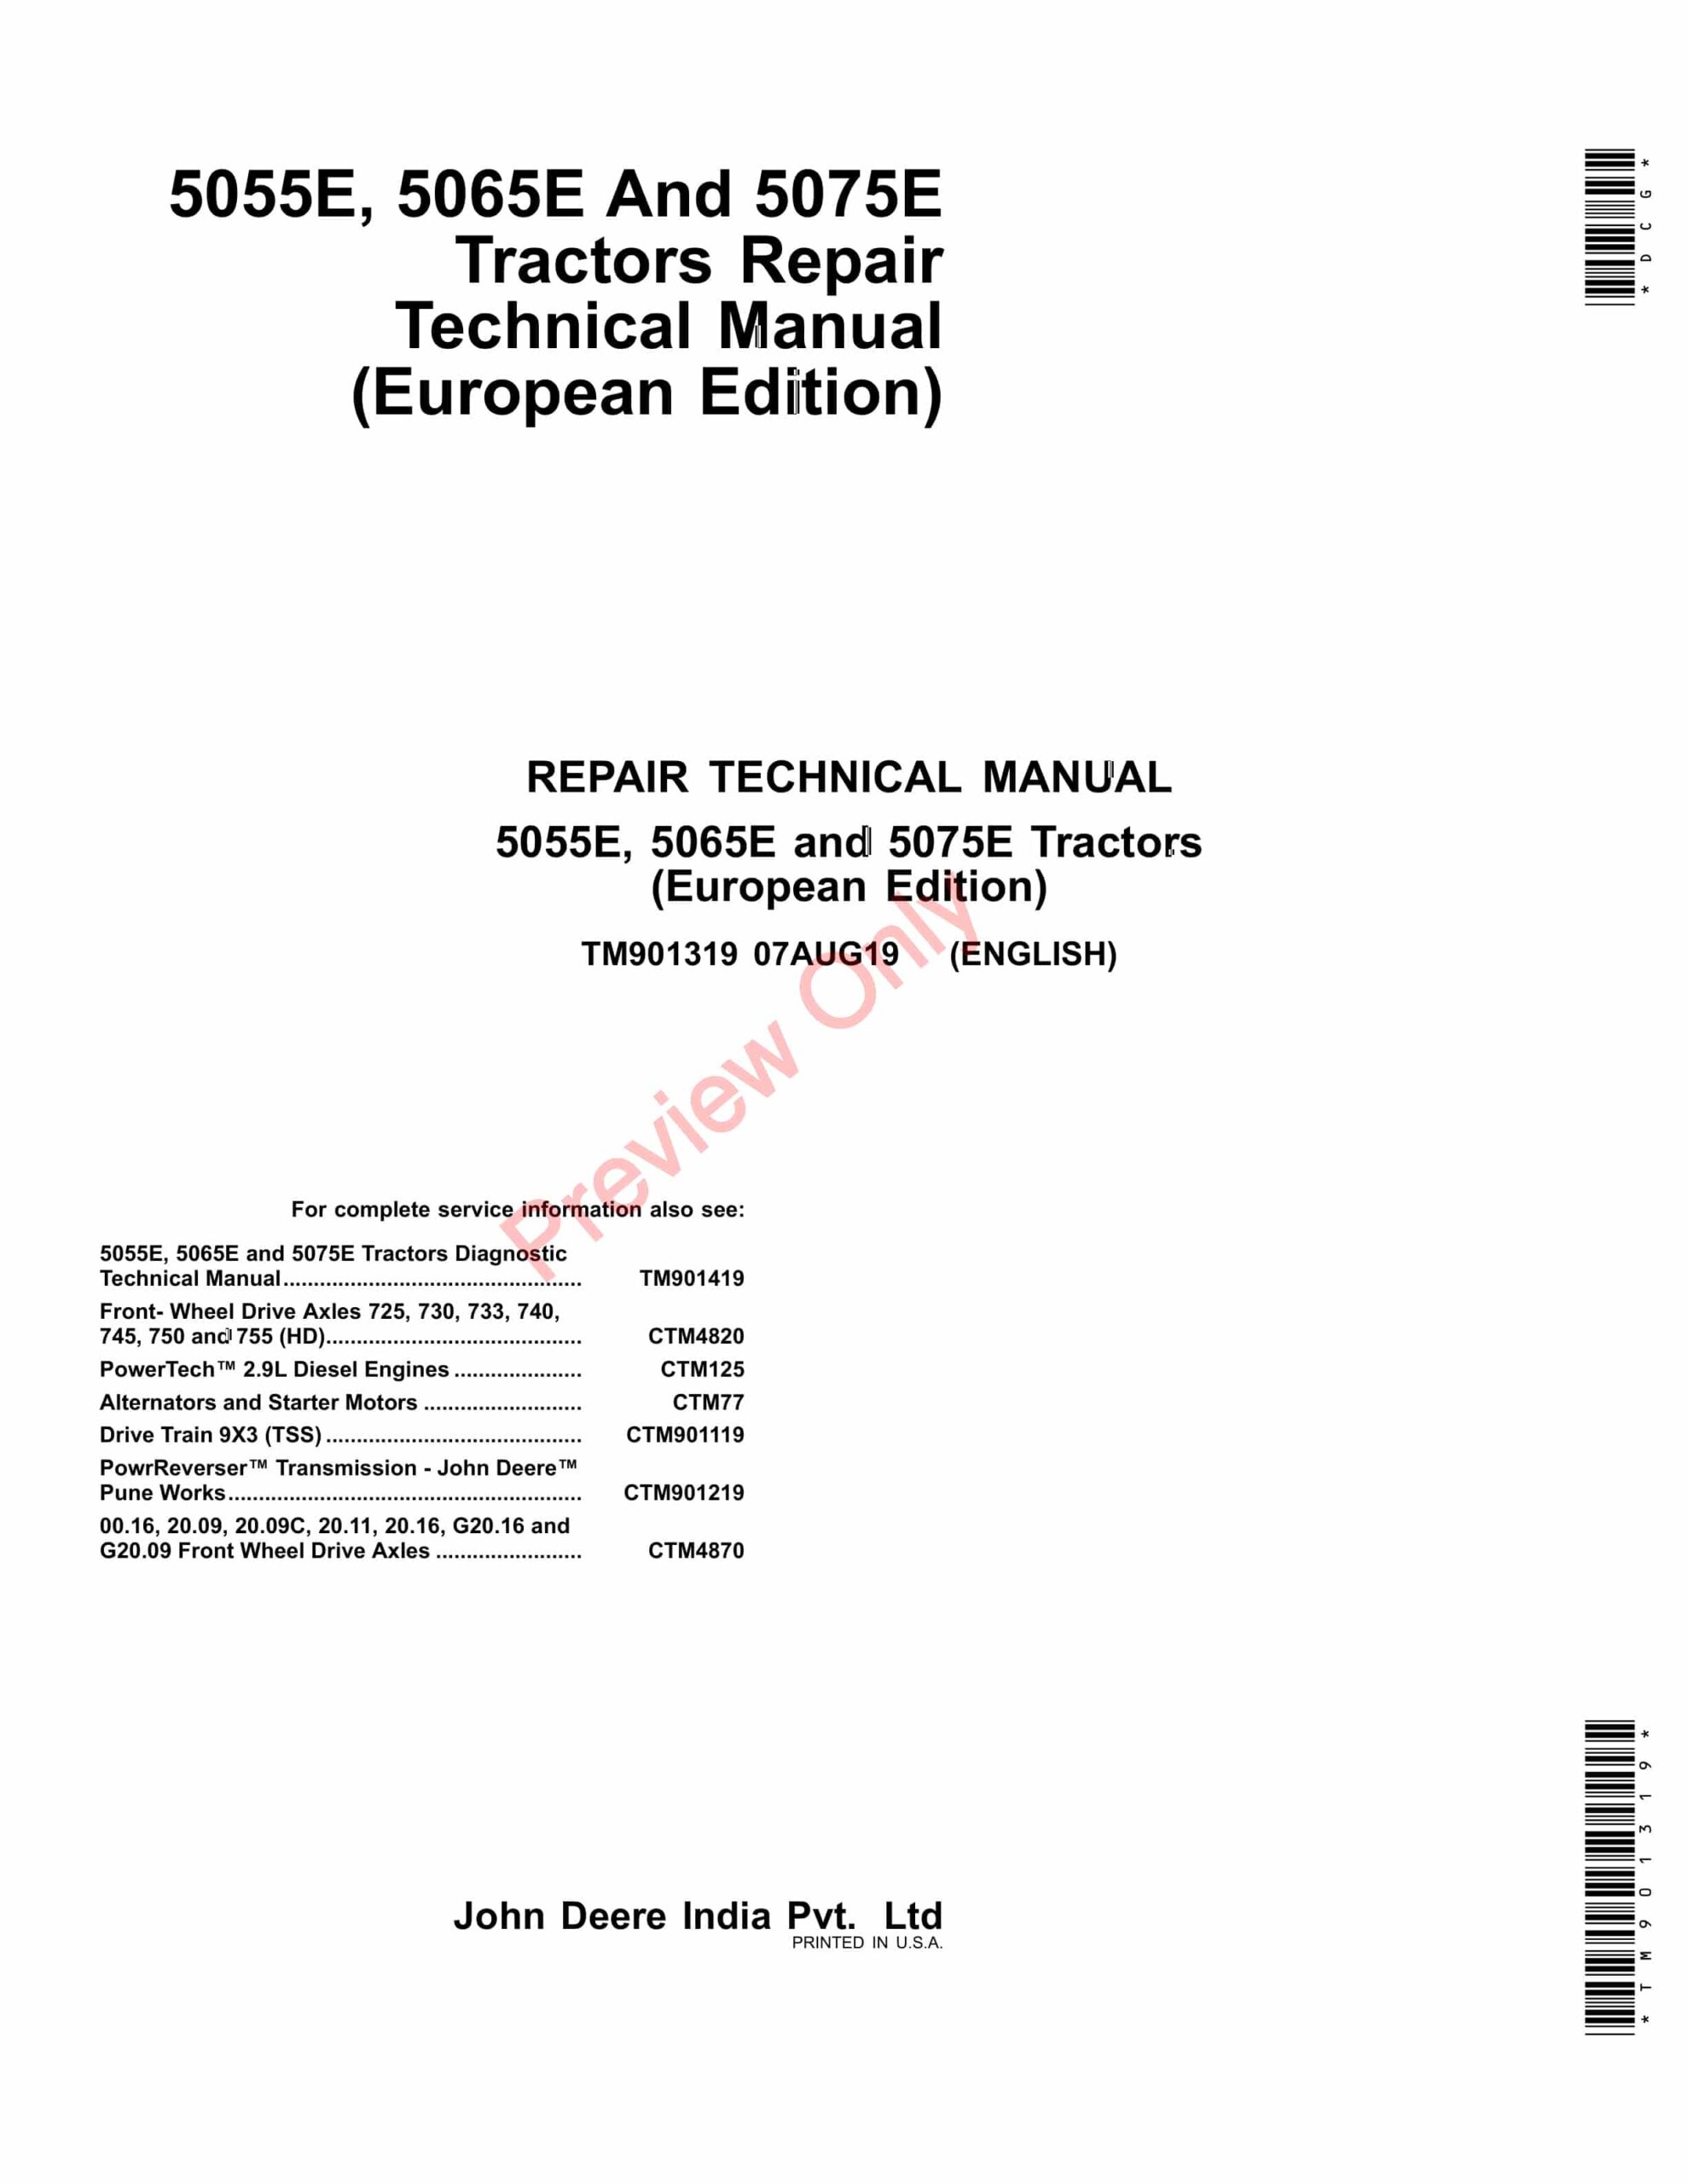 John Deere 5055E, 5065E and 5075E Tractors Repair Technical Manual TM901319 07AUG19-1